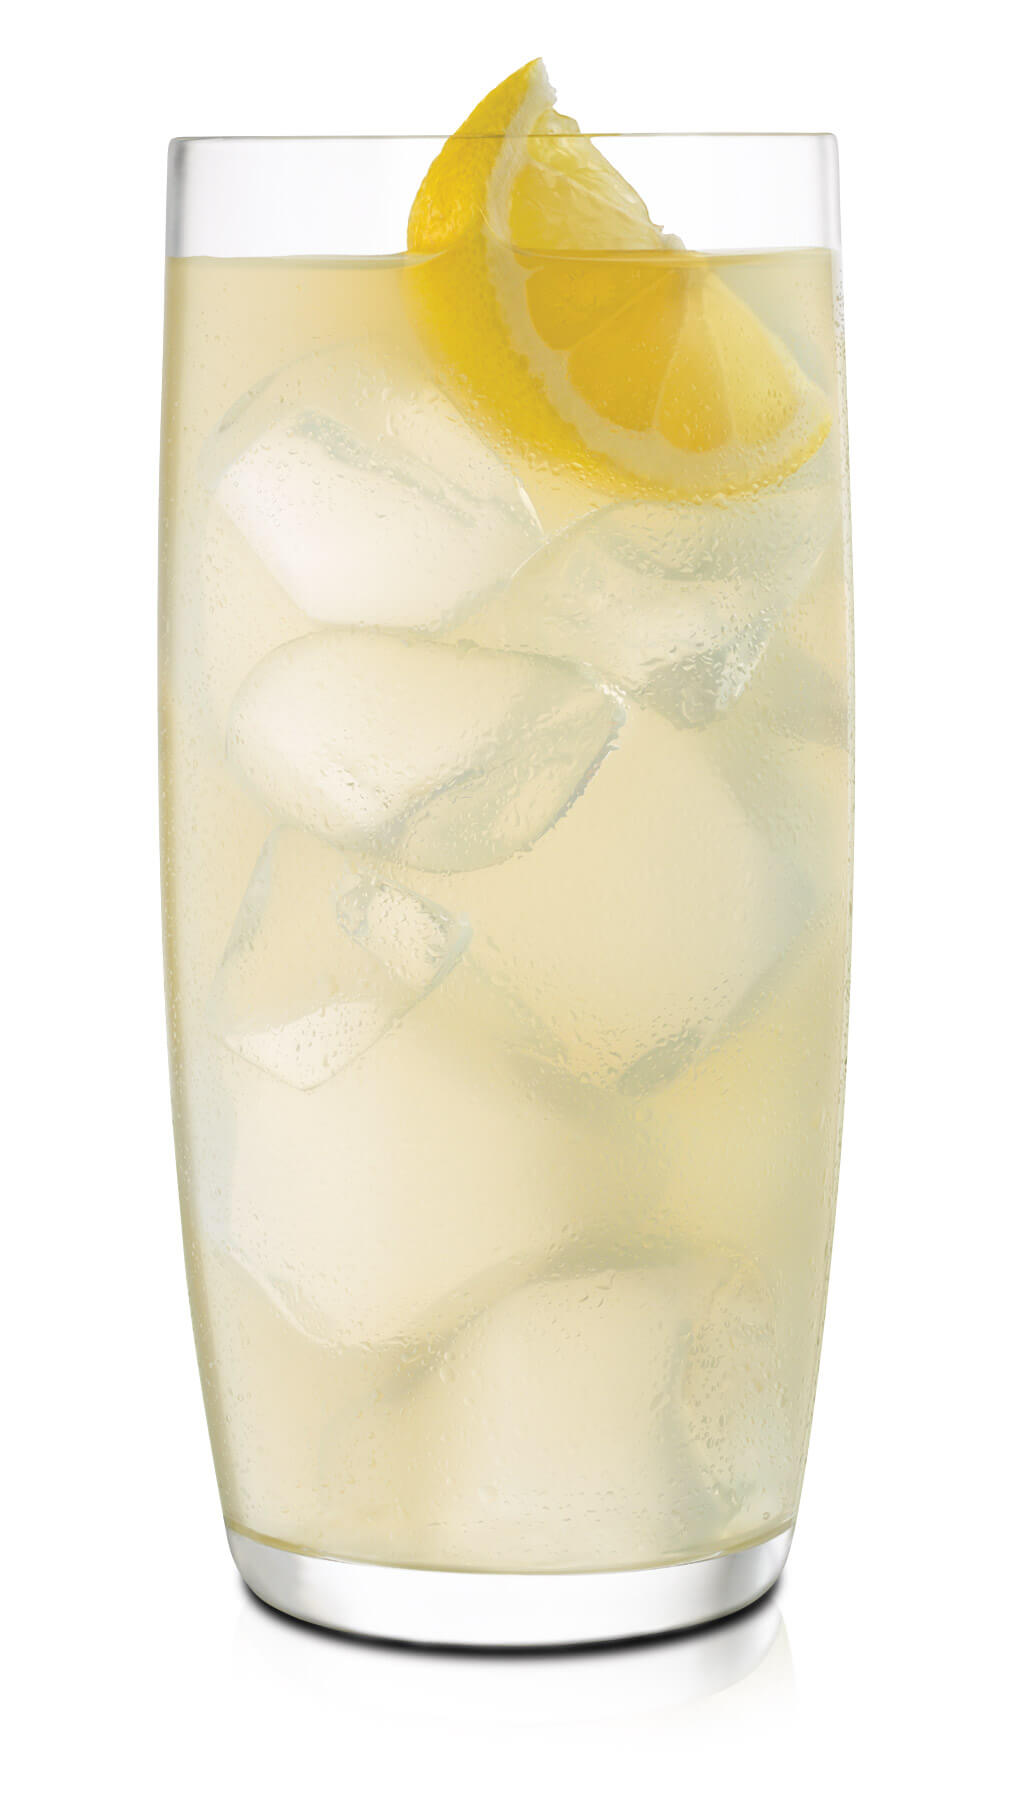 Black Cherry Lemonade with EFFEN Cucumber Vodka. Sweet, with a splash of lemon lime soda.